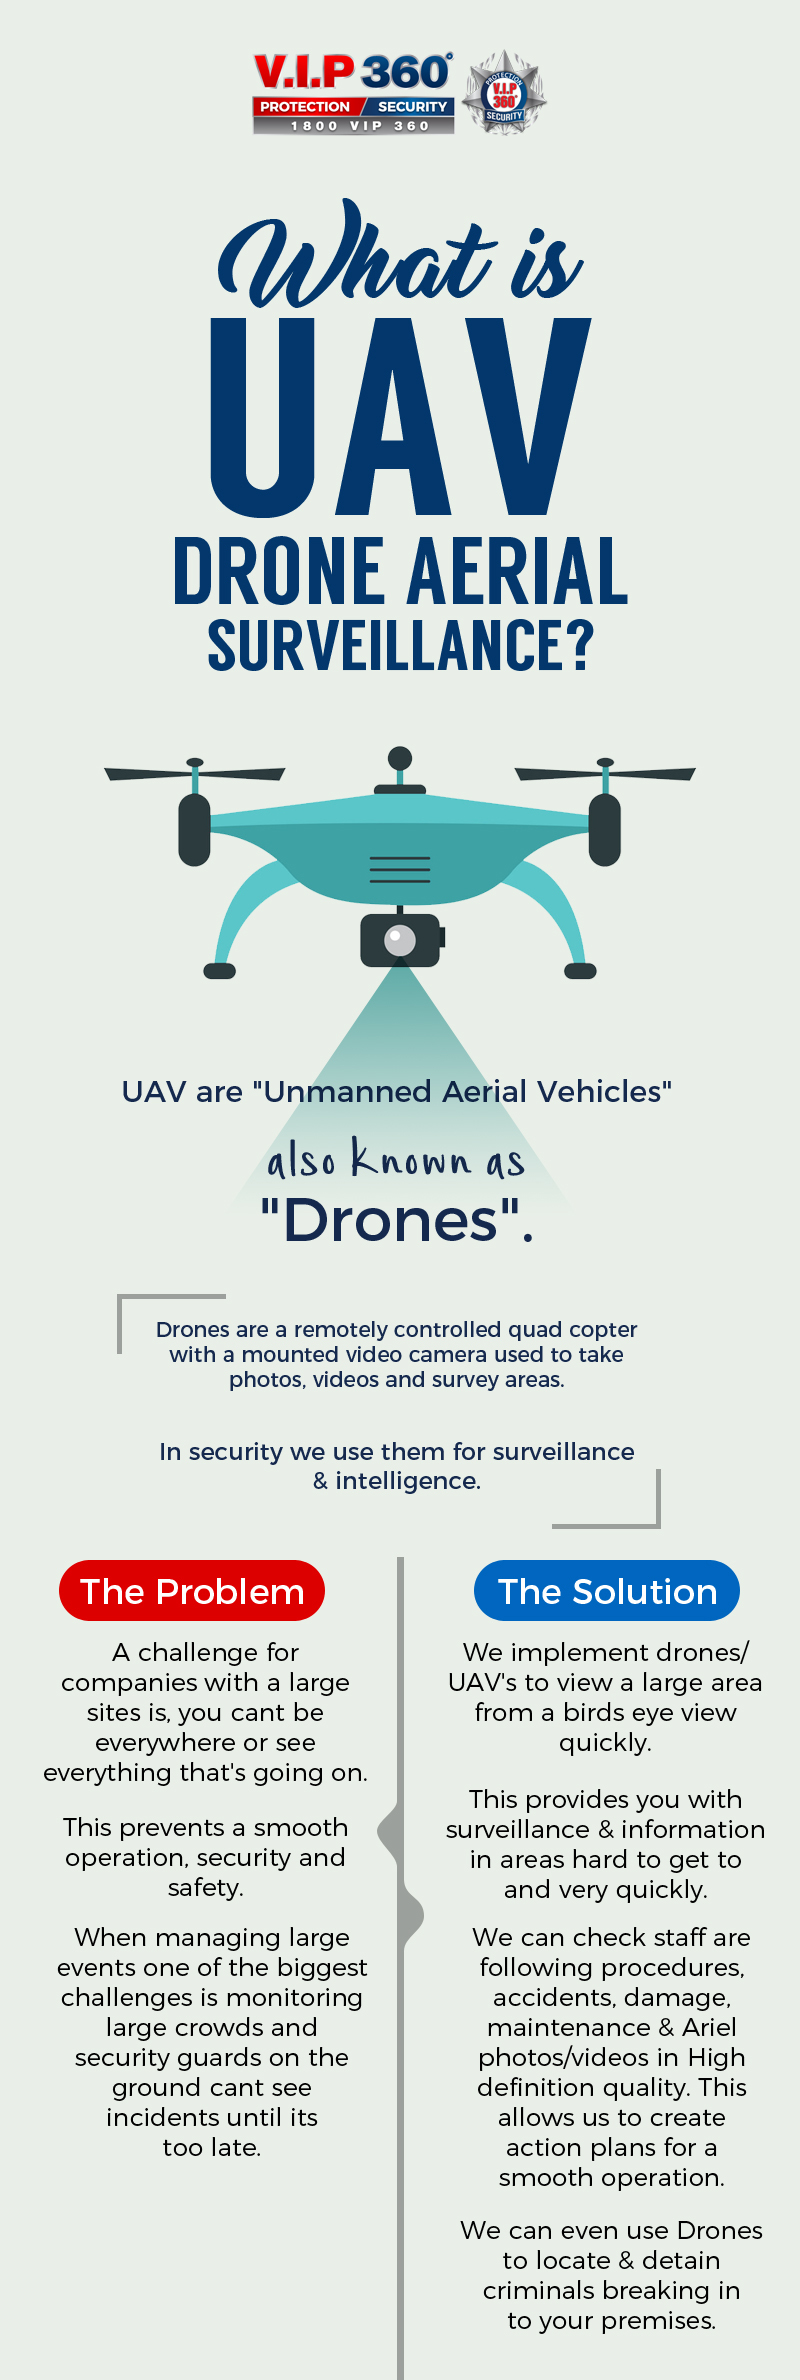 Secure your Premises with VIP 360’s UAV/Drone Security & Surveillance